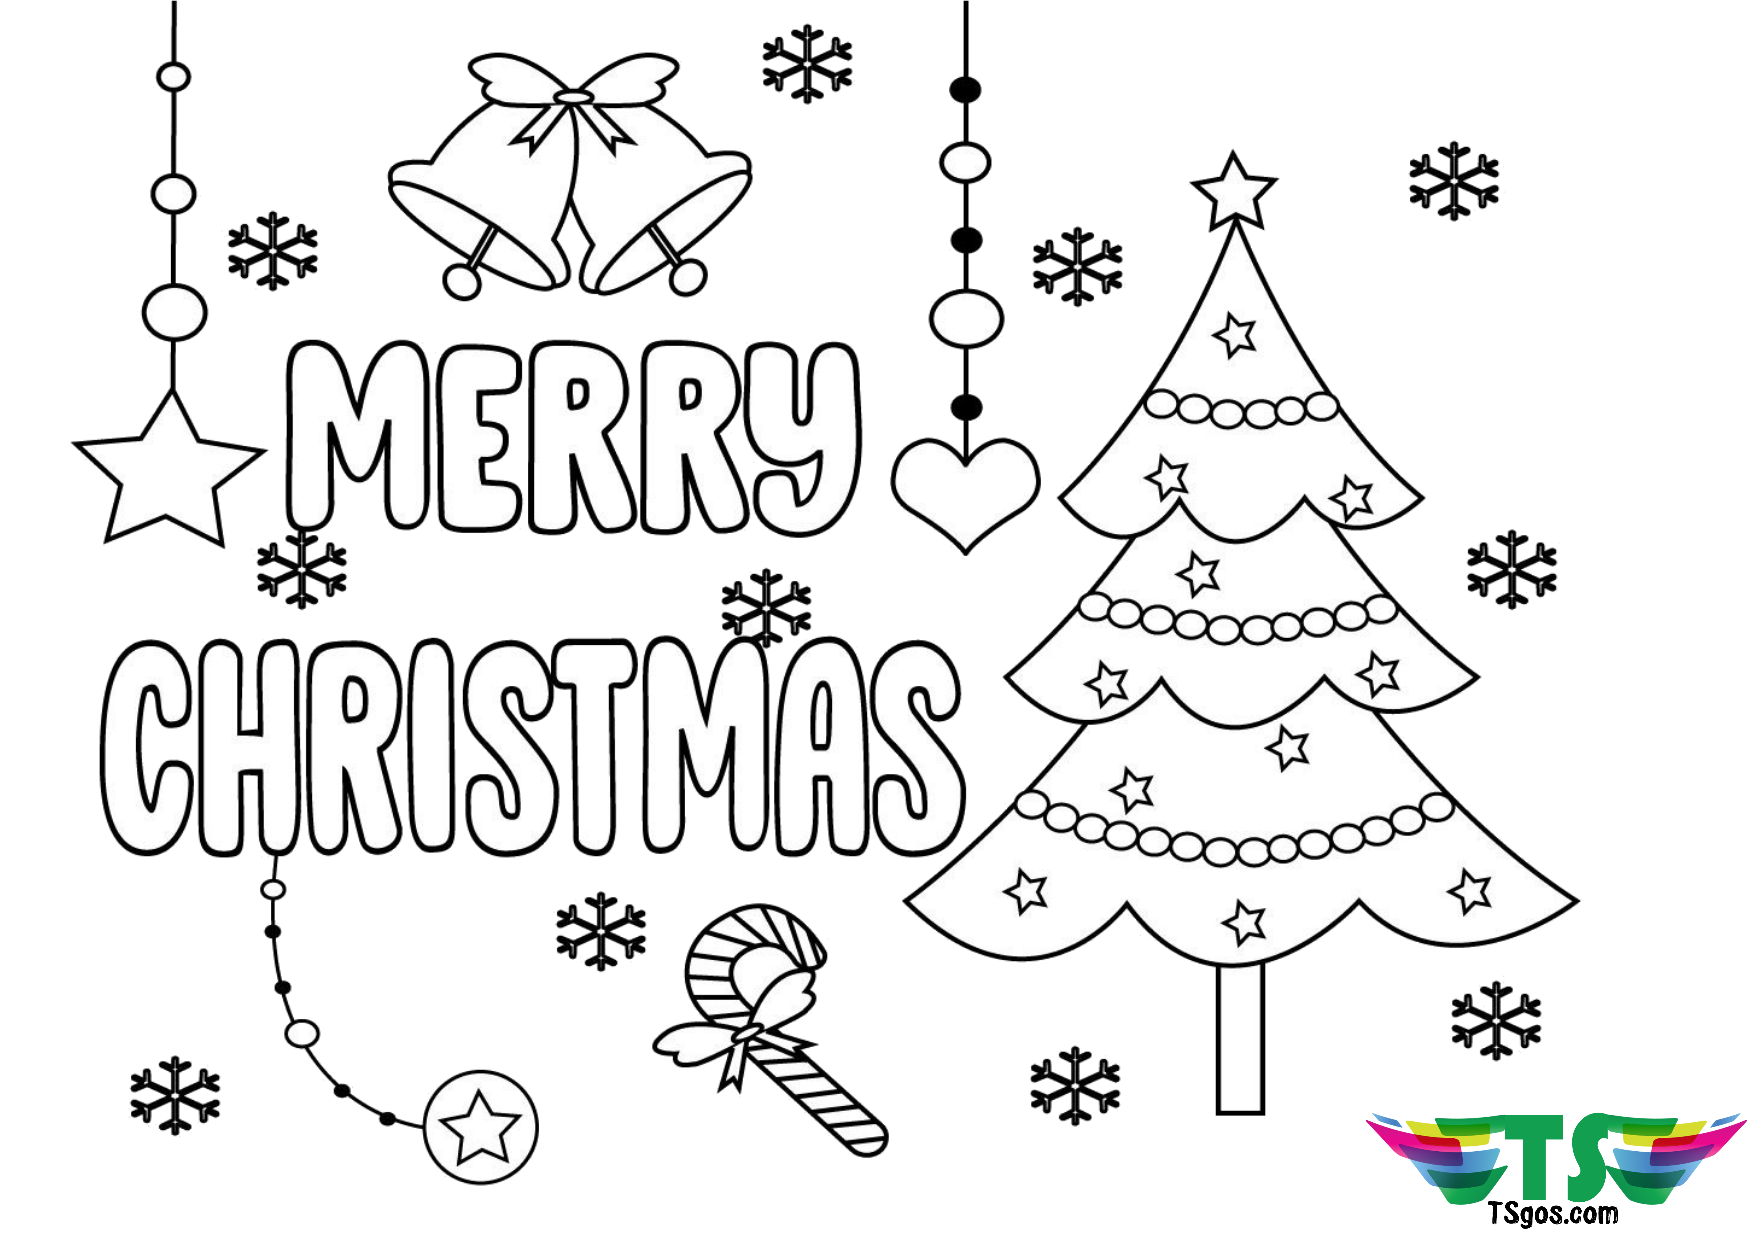 Merry Christmas free printable coloring page. - TSgos.com